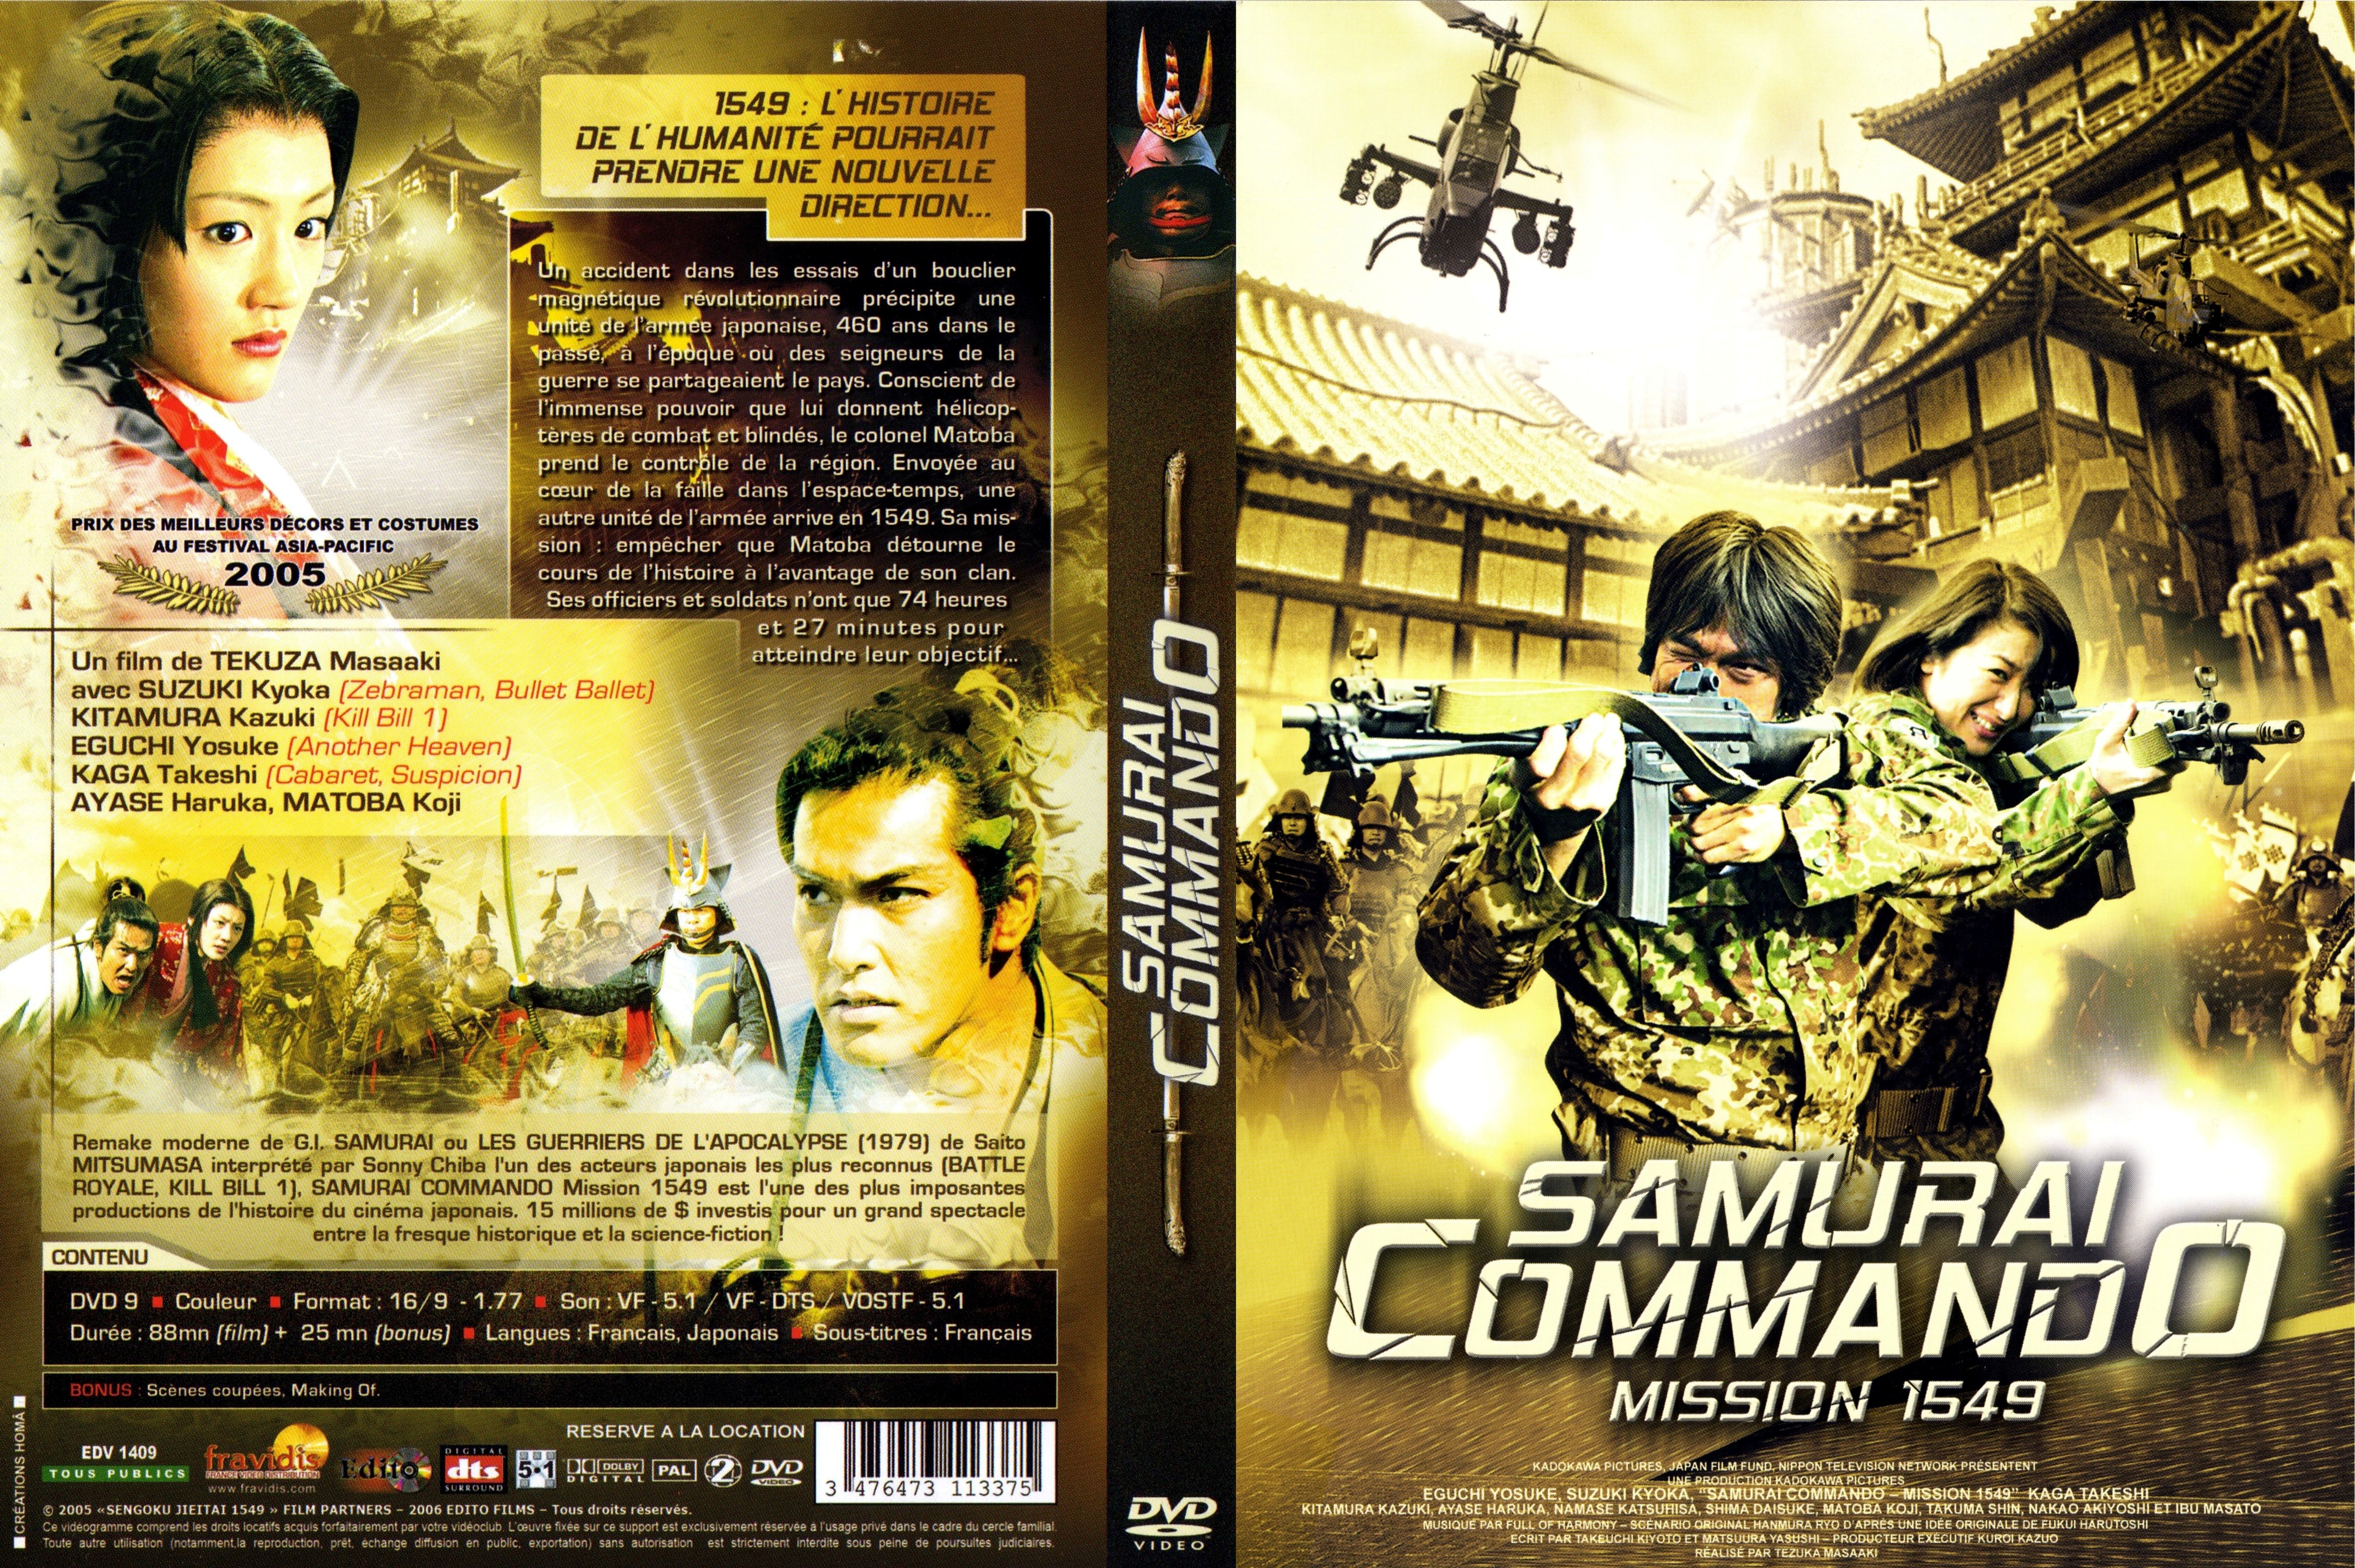 Jaquette DVD Samurai commando v5